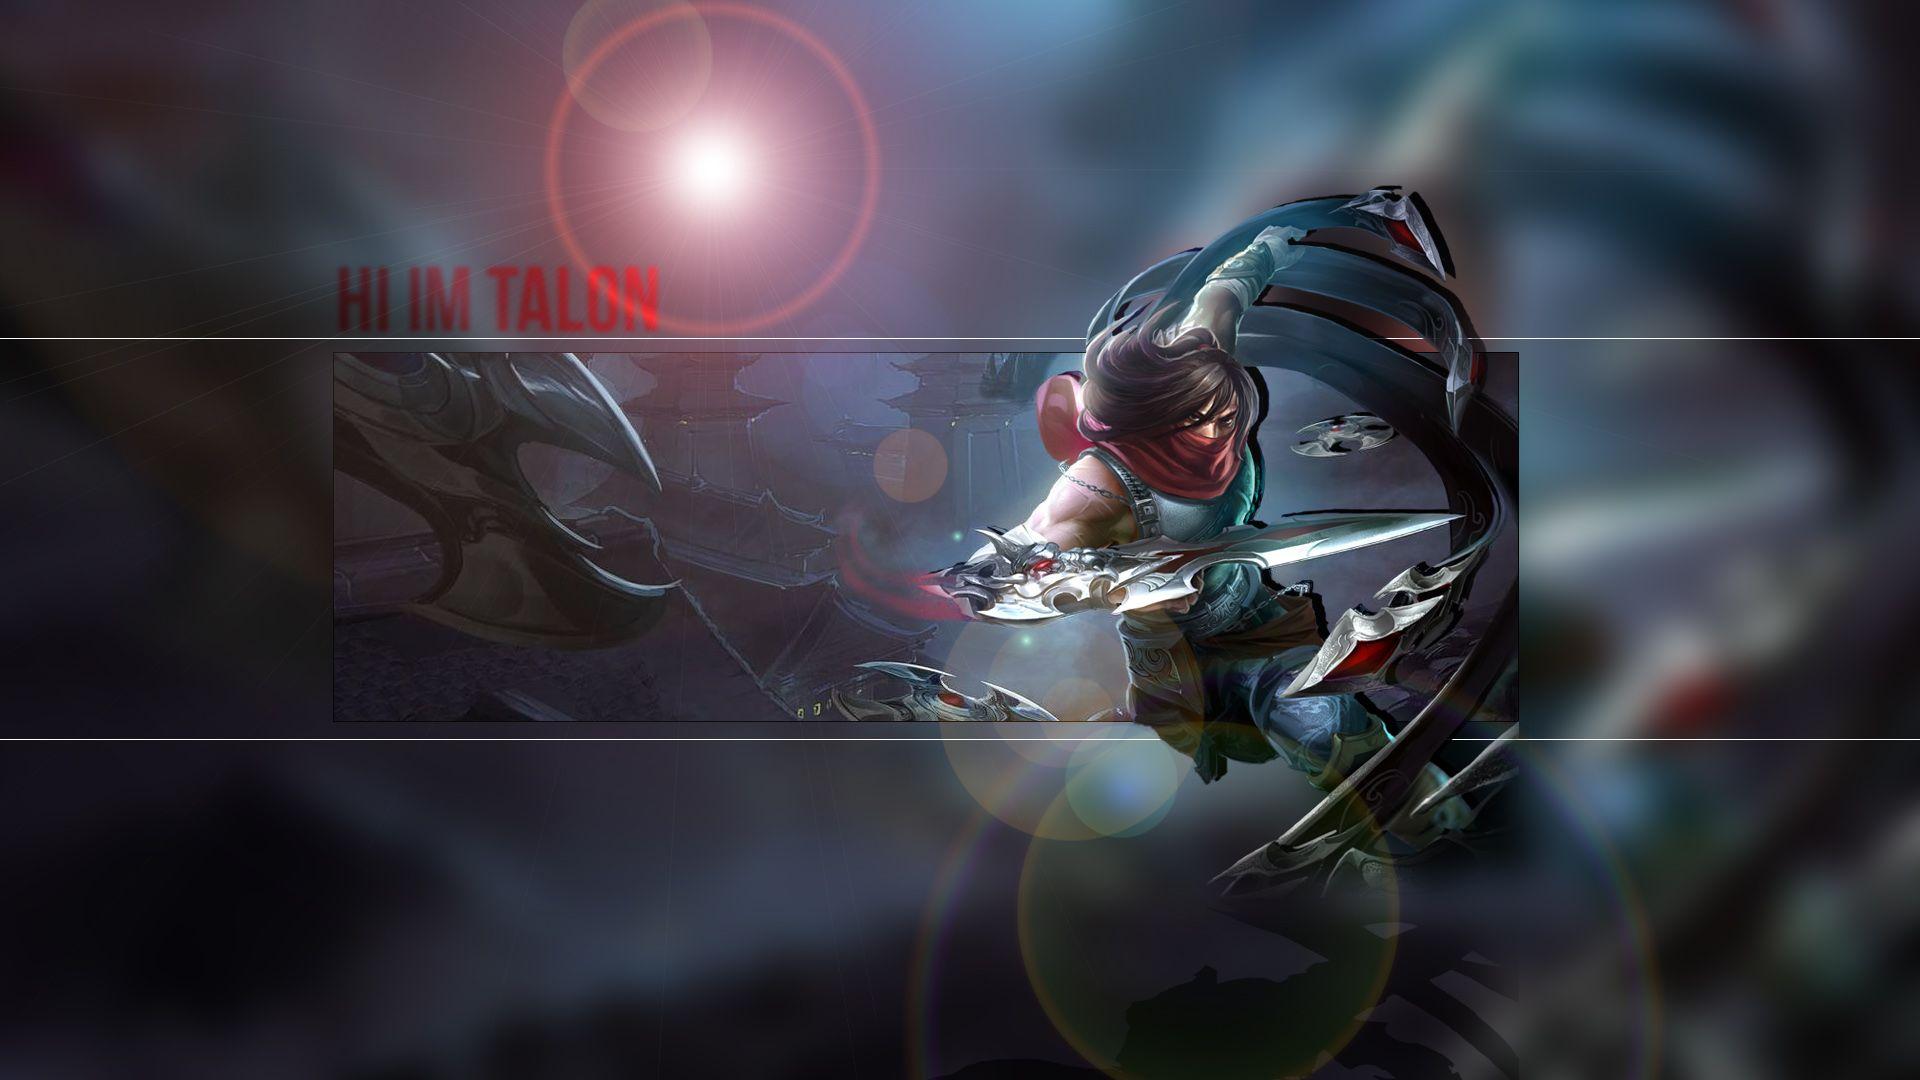 Dragonblade Talon